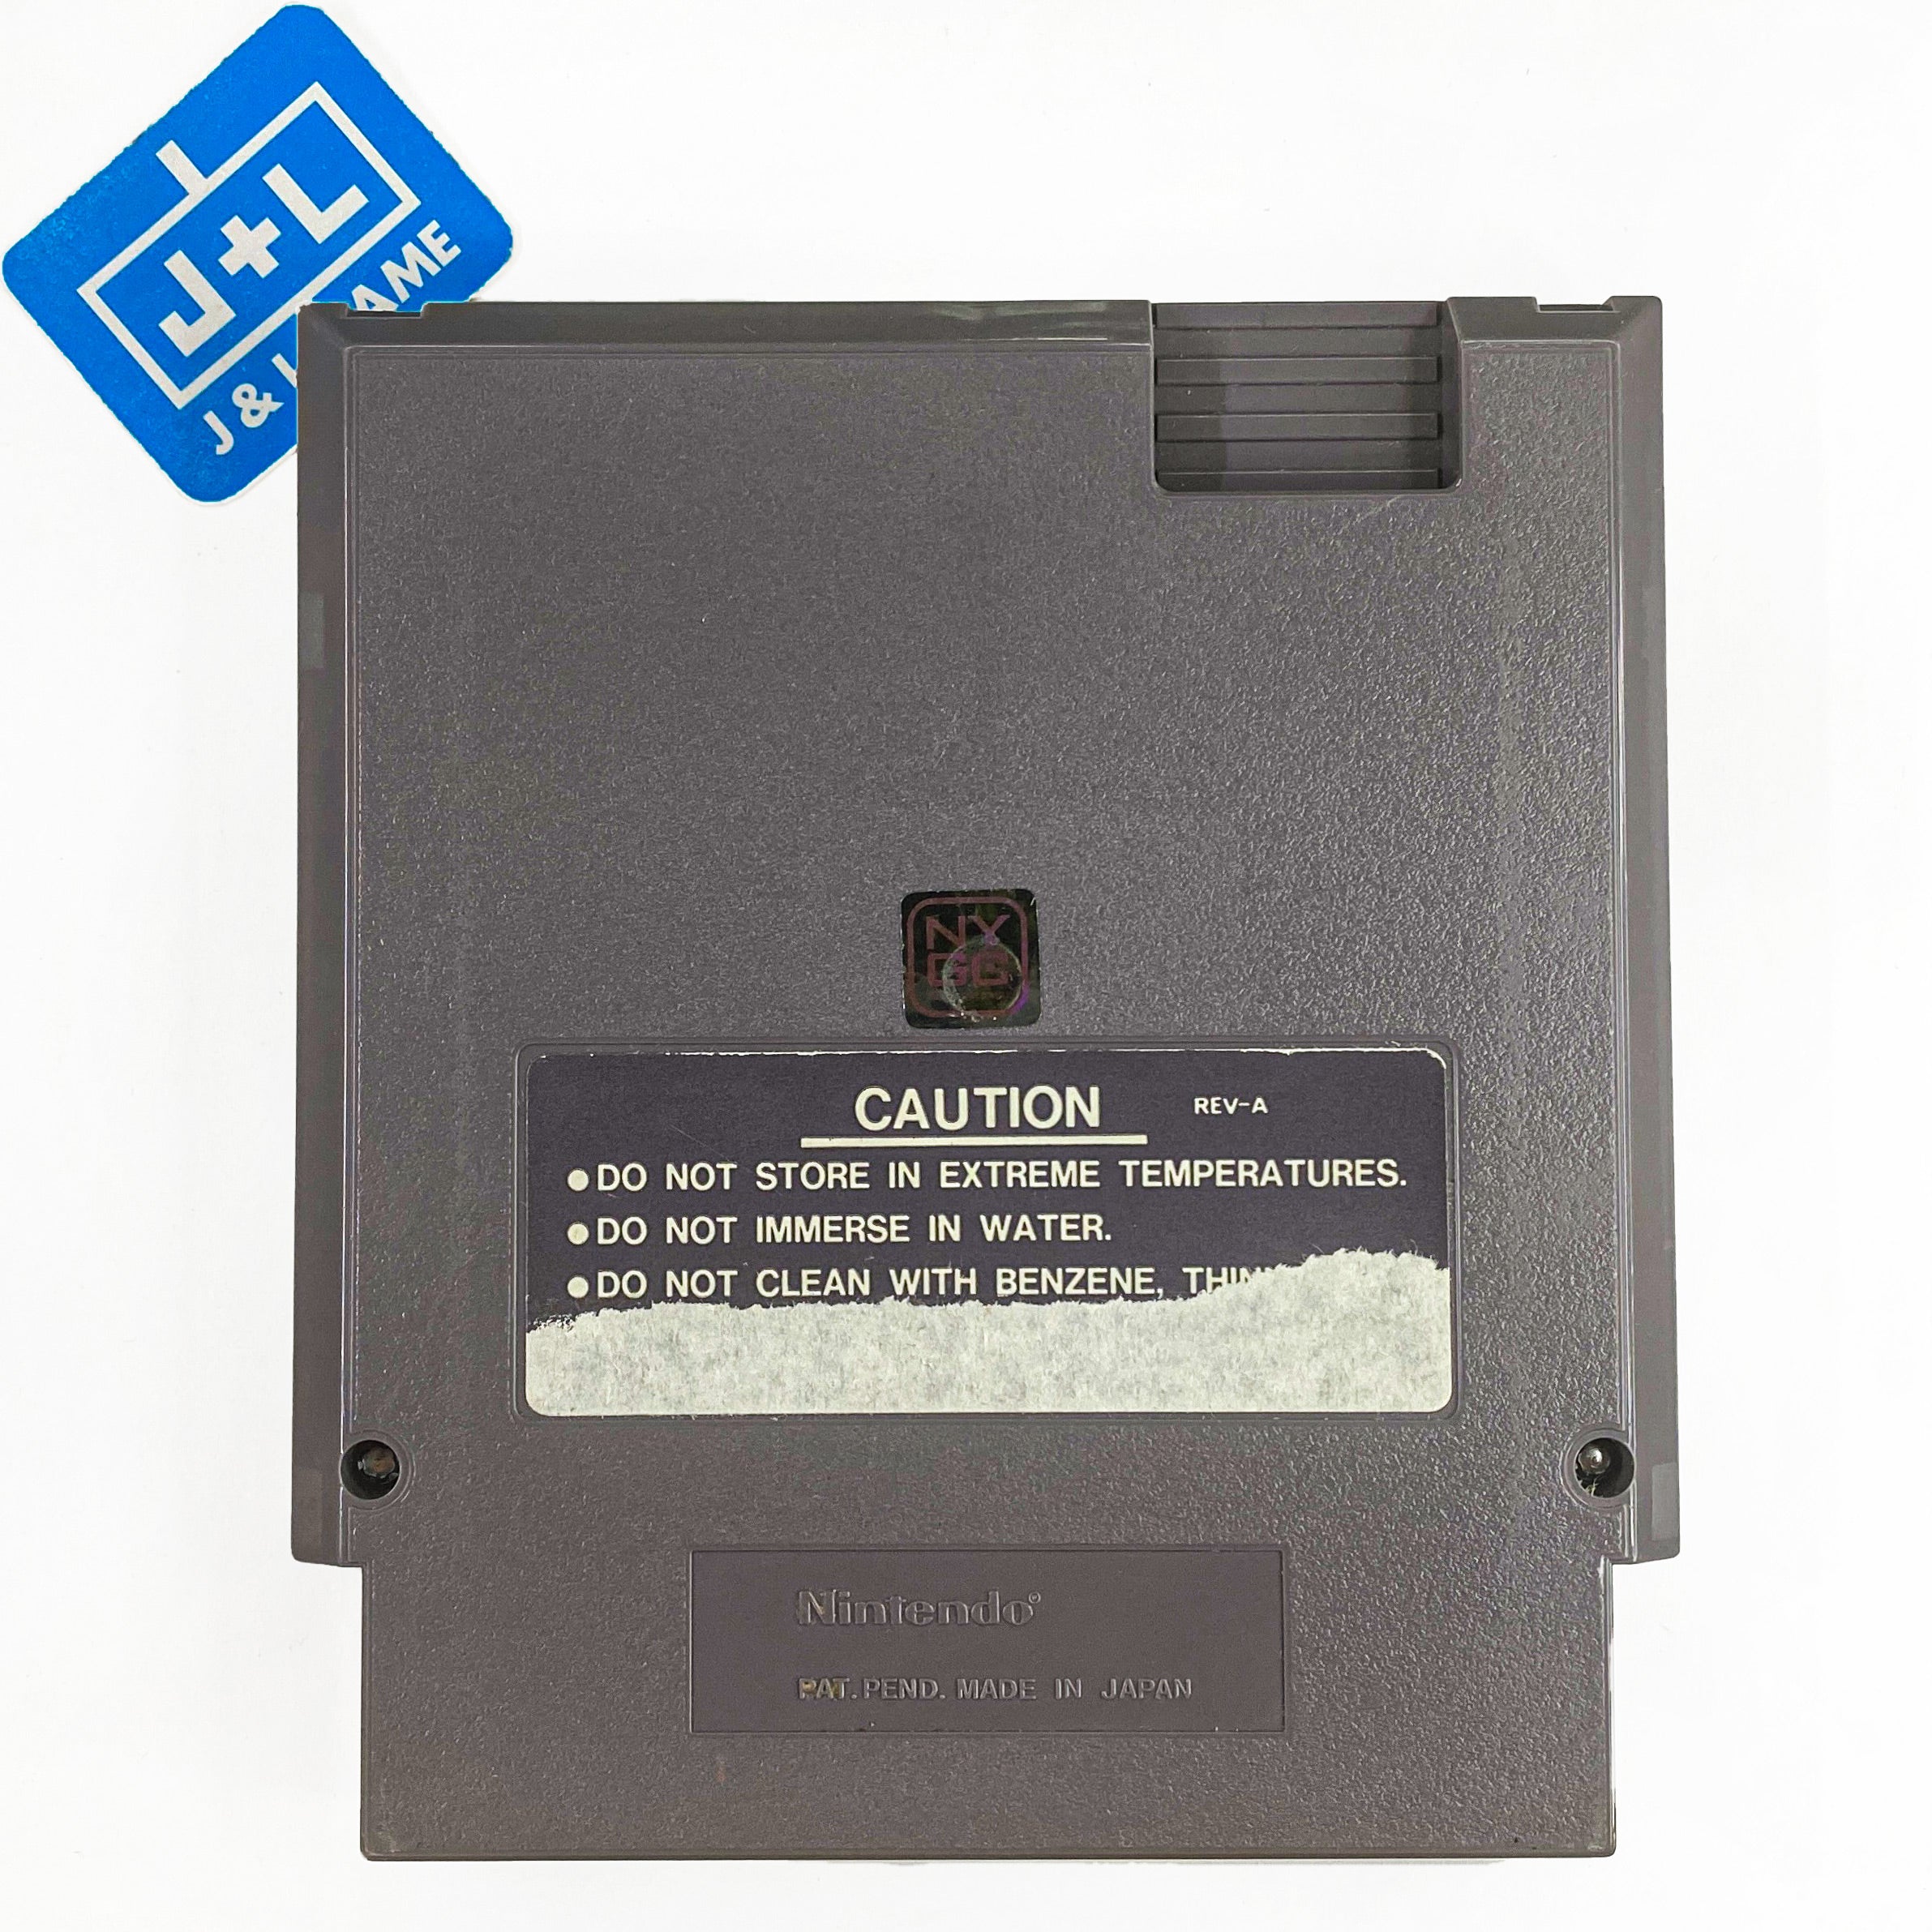 Classic Concentration - (NES) Nintendo Entertainment System [Pre-Owned] Video Games GameTek   